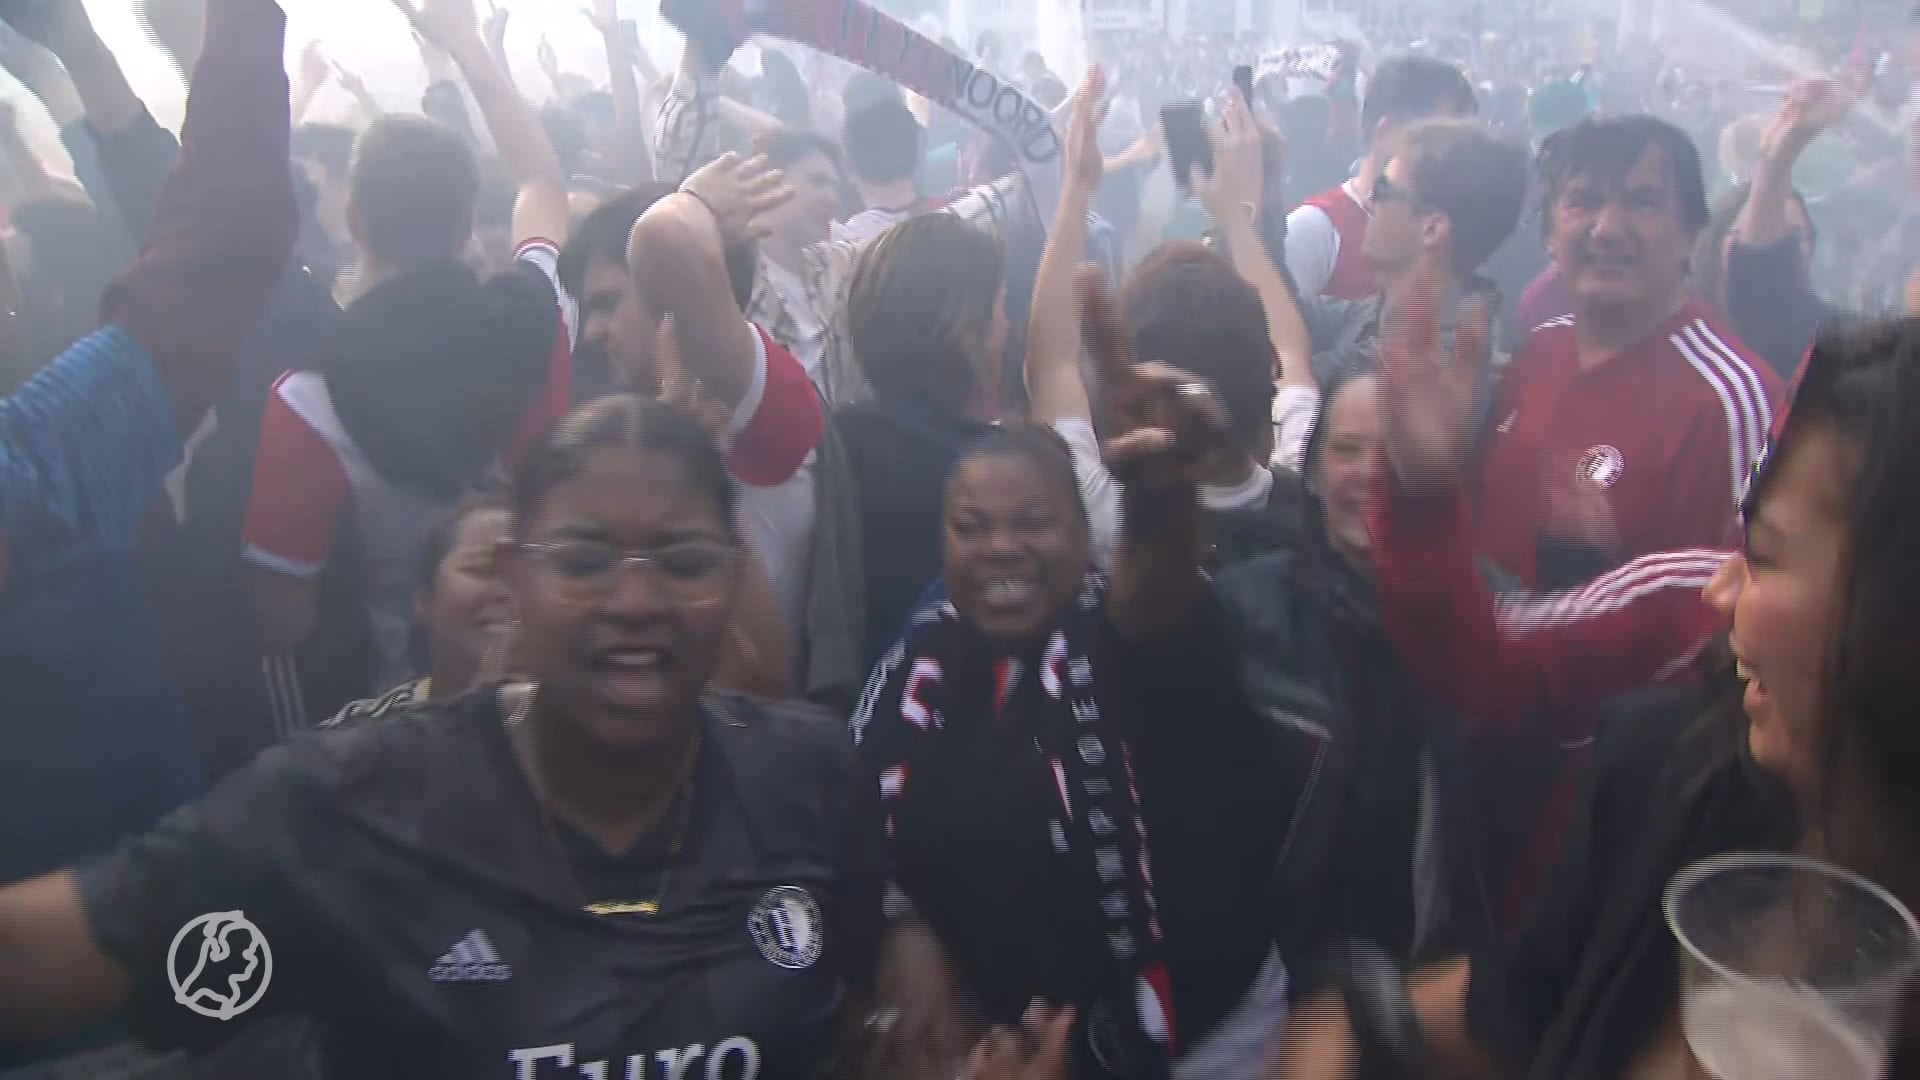 Honderden Feyenoordfans springen in de fontein na overwinning